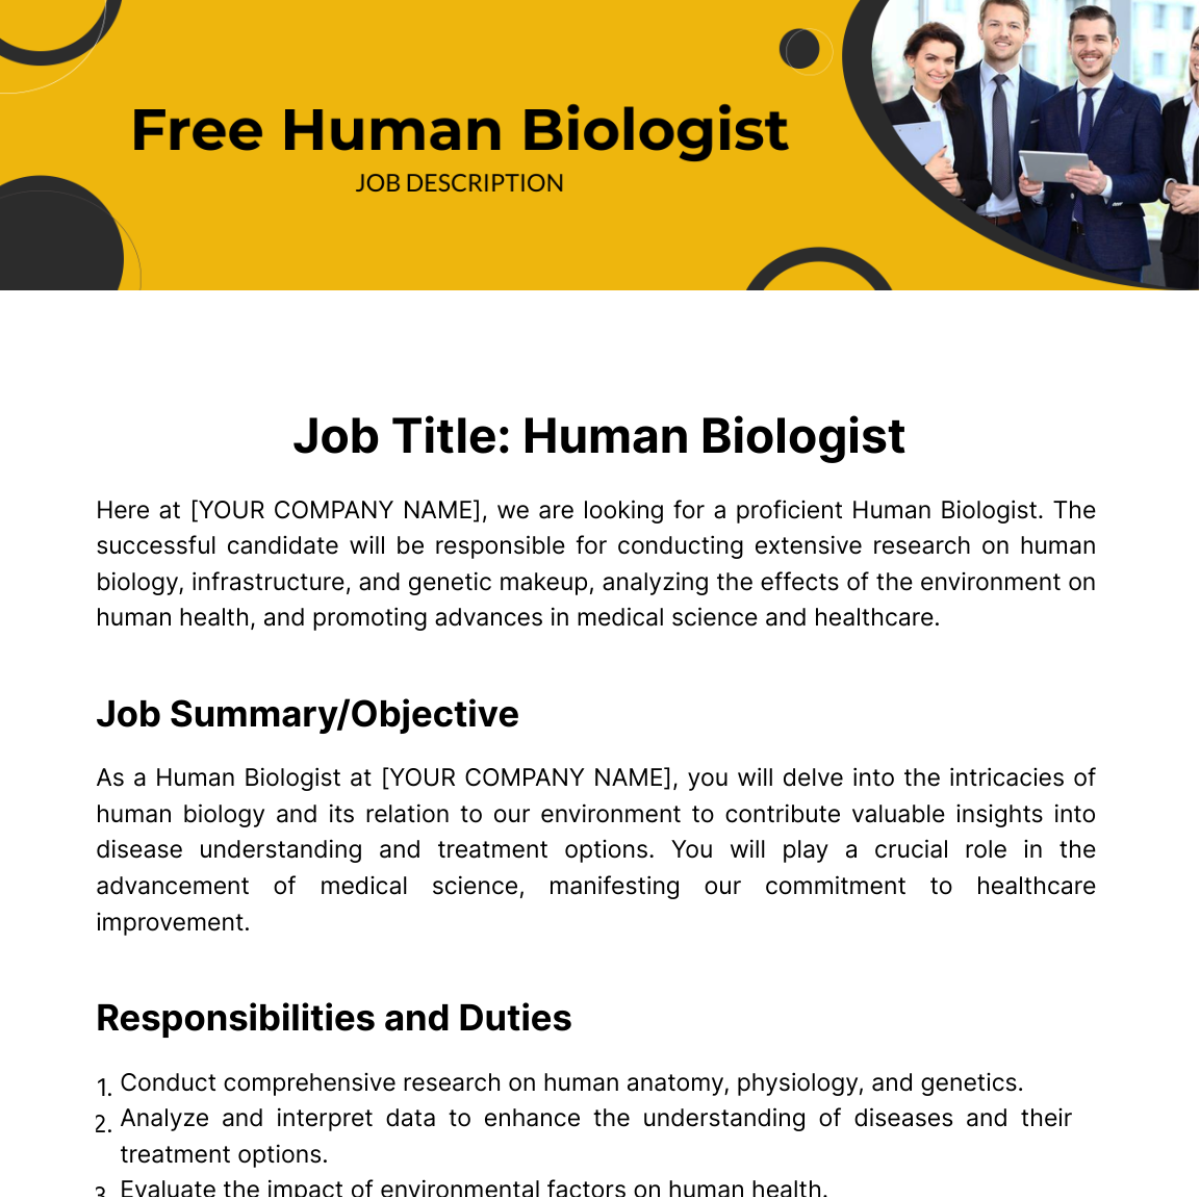 Human Biologist Job Description Template